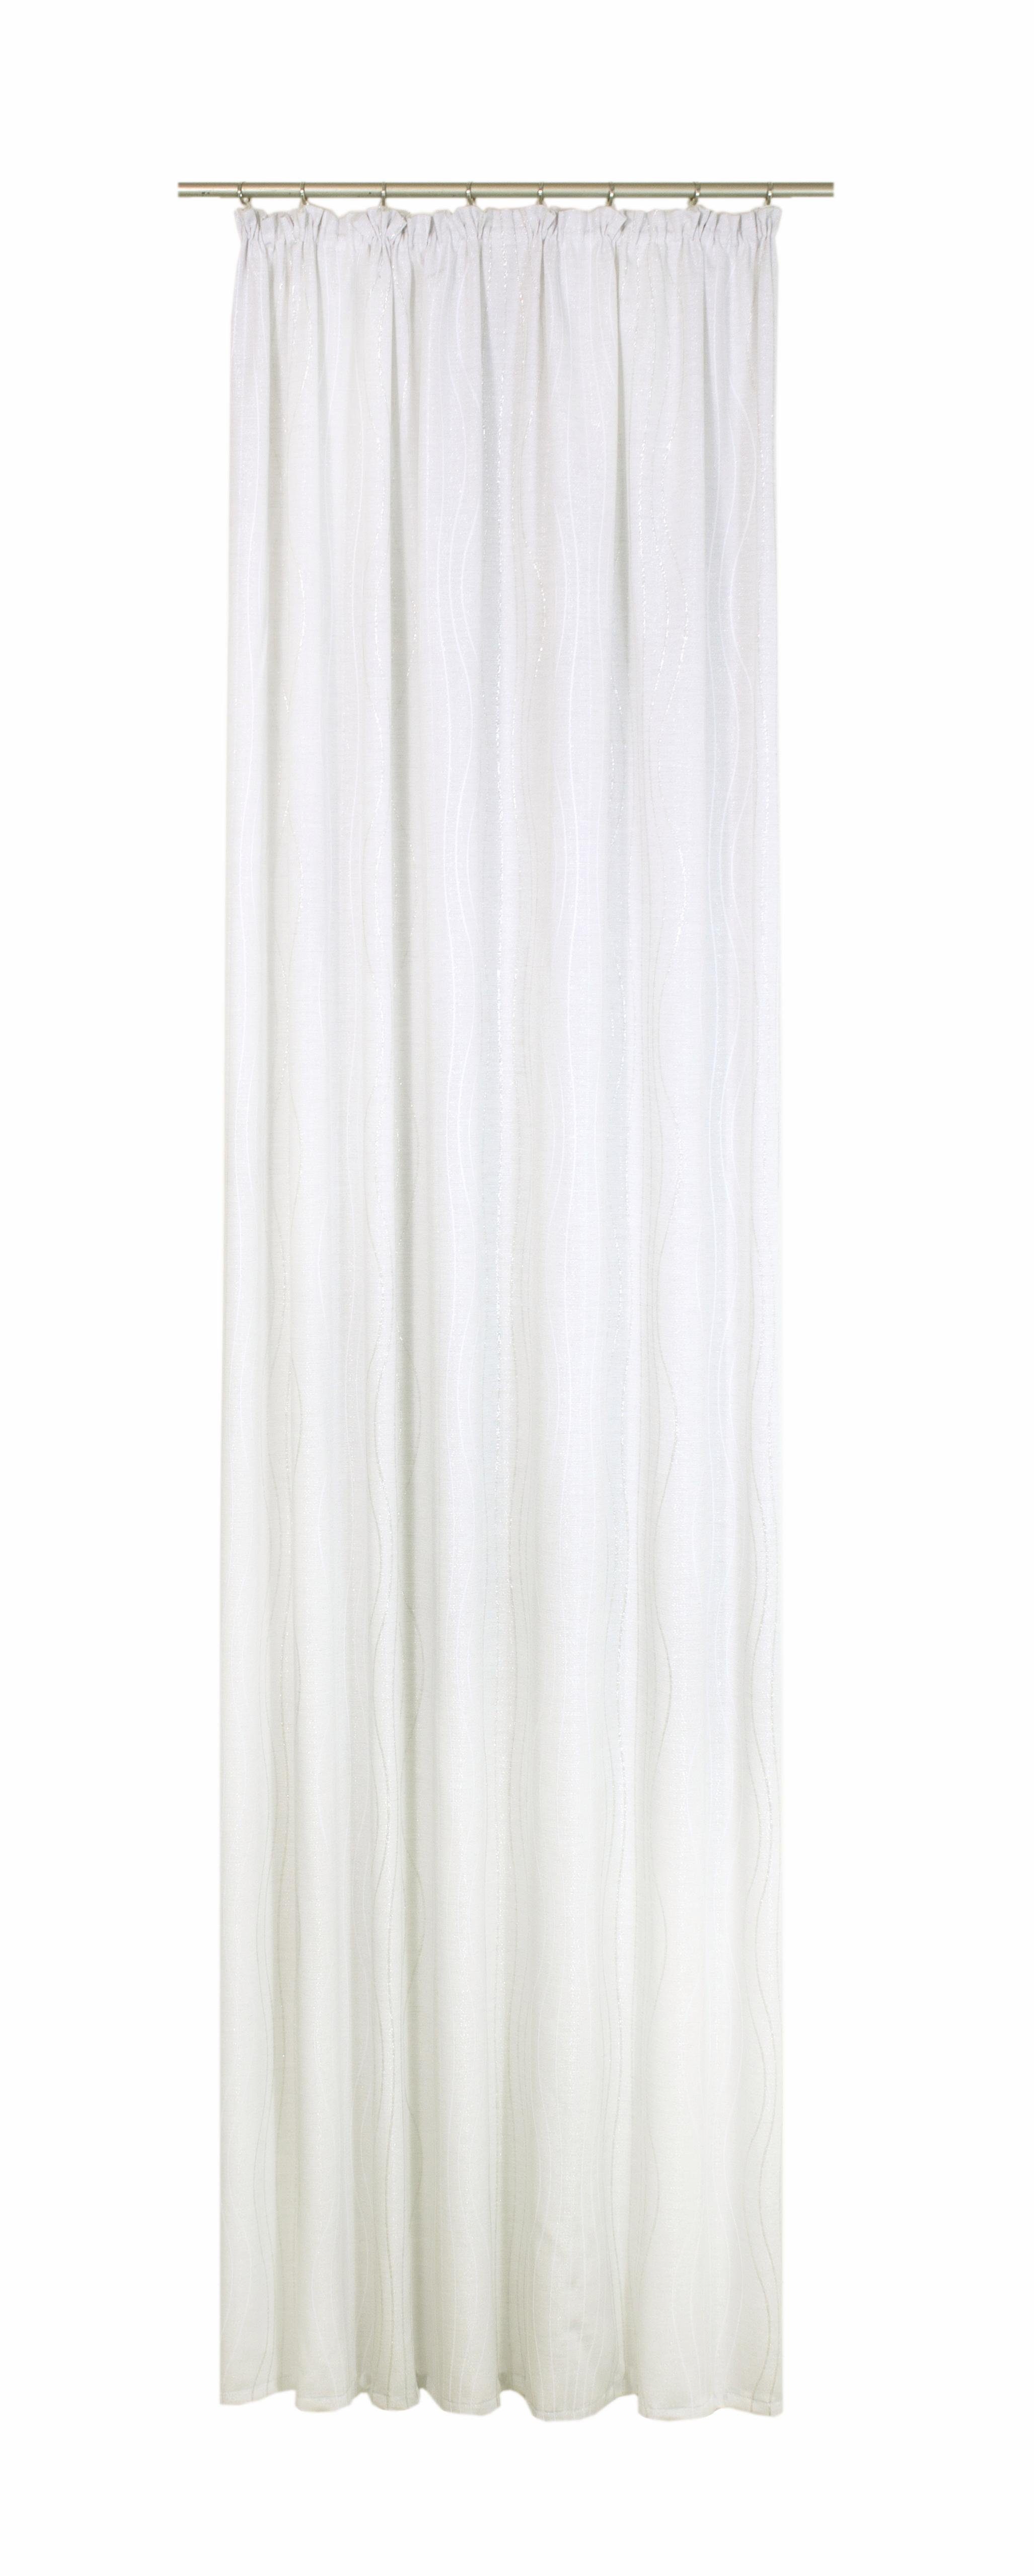 Vorhang Wirth, RICCIA, weiß/silberfarben Kräuselband (1 St), blickdicht, Jacquard